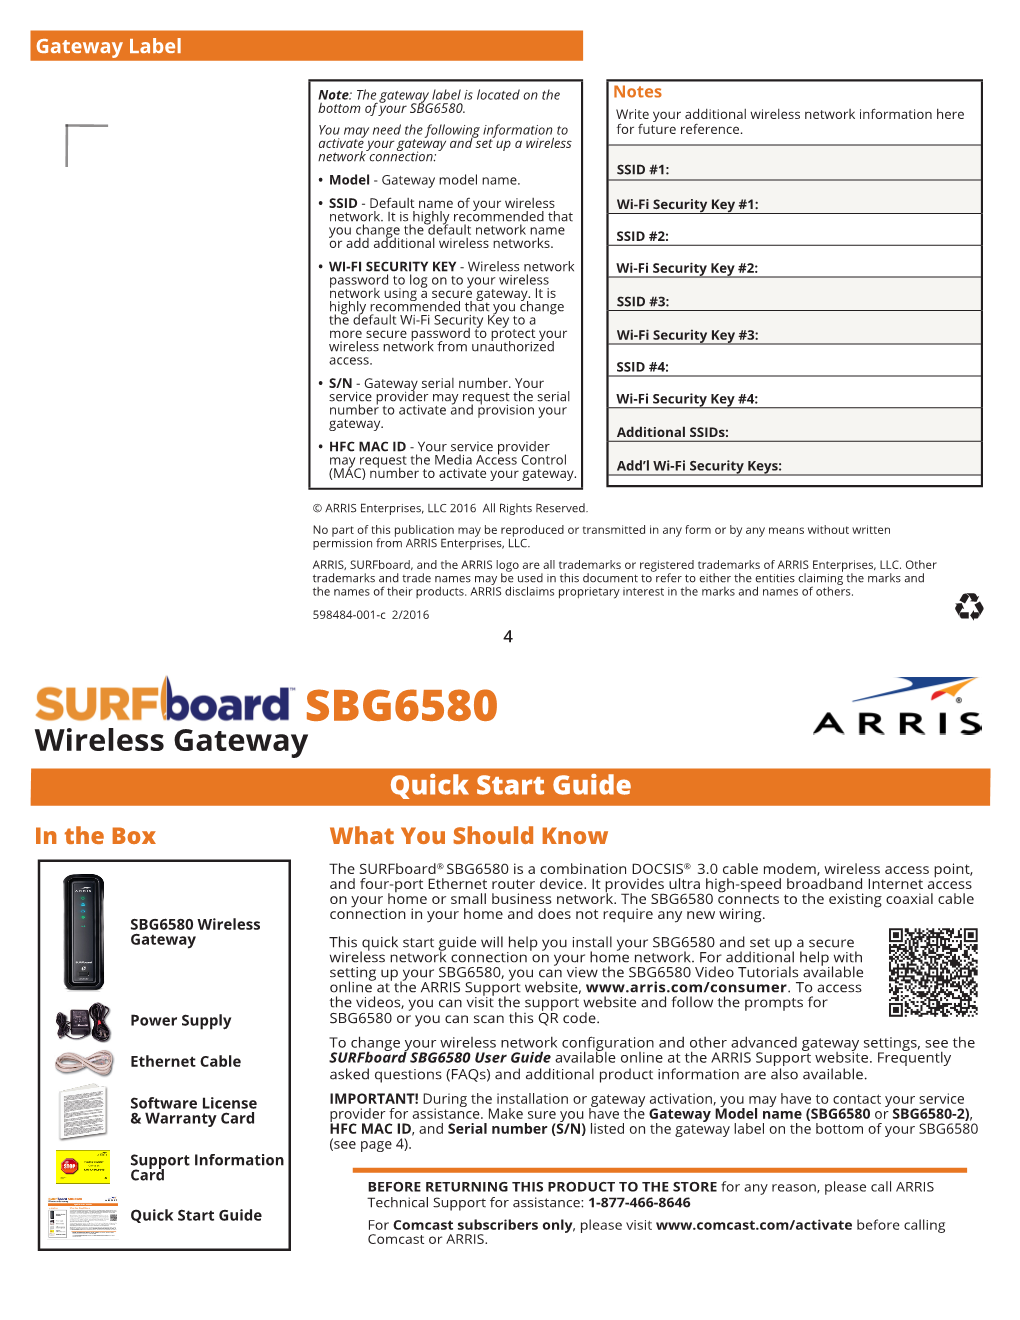 Arris SBG6580 User Guide